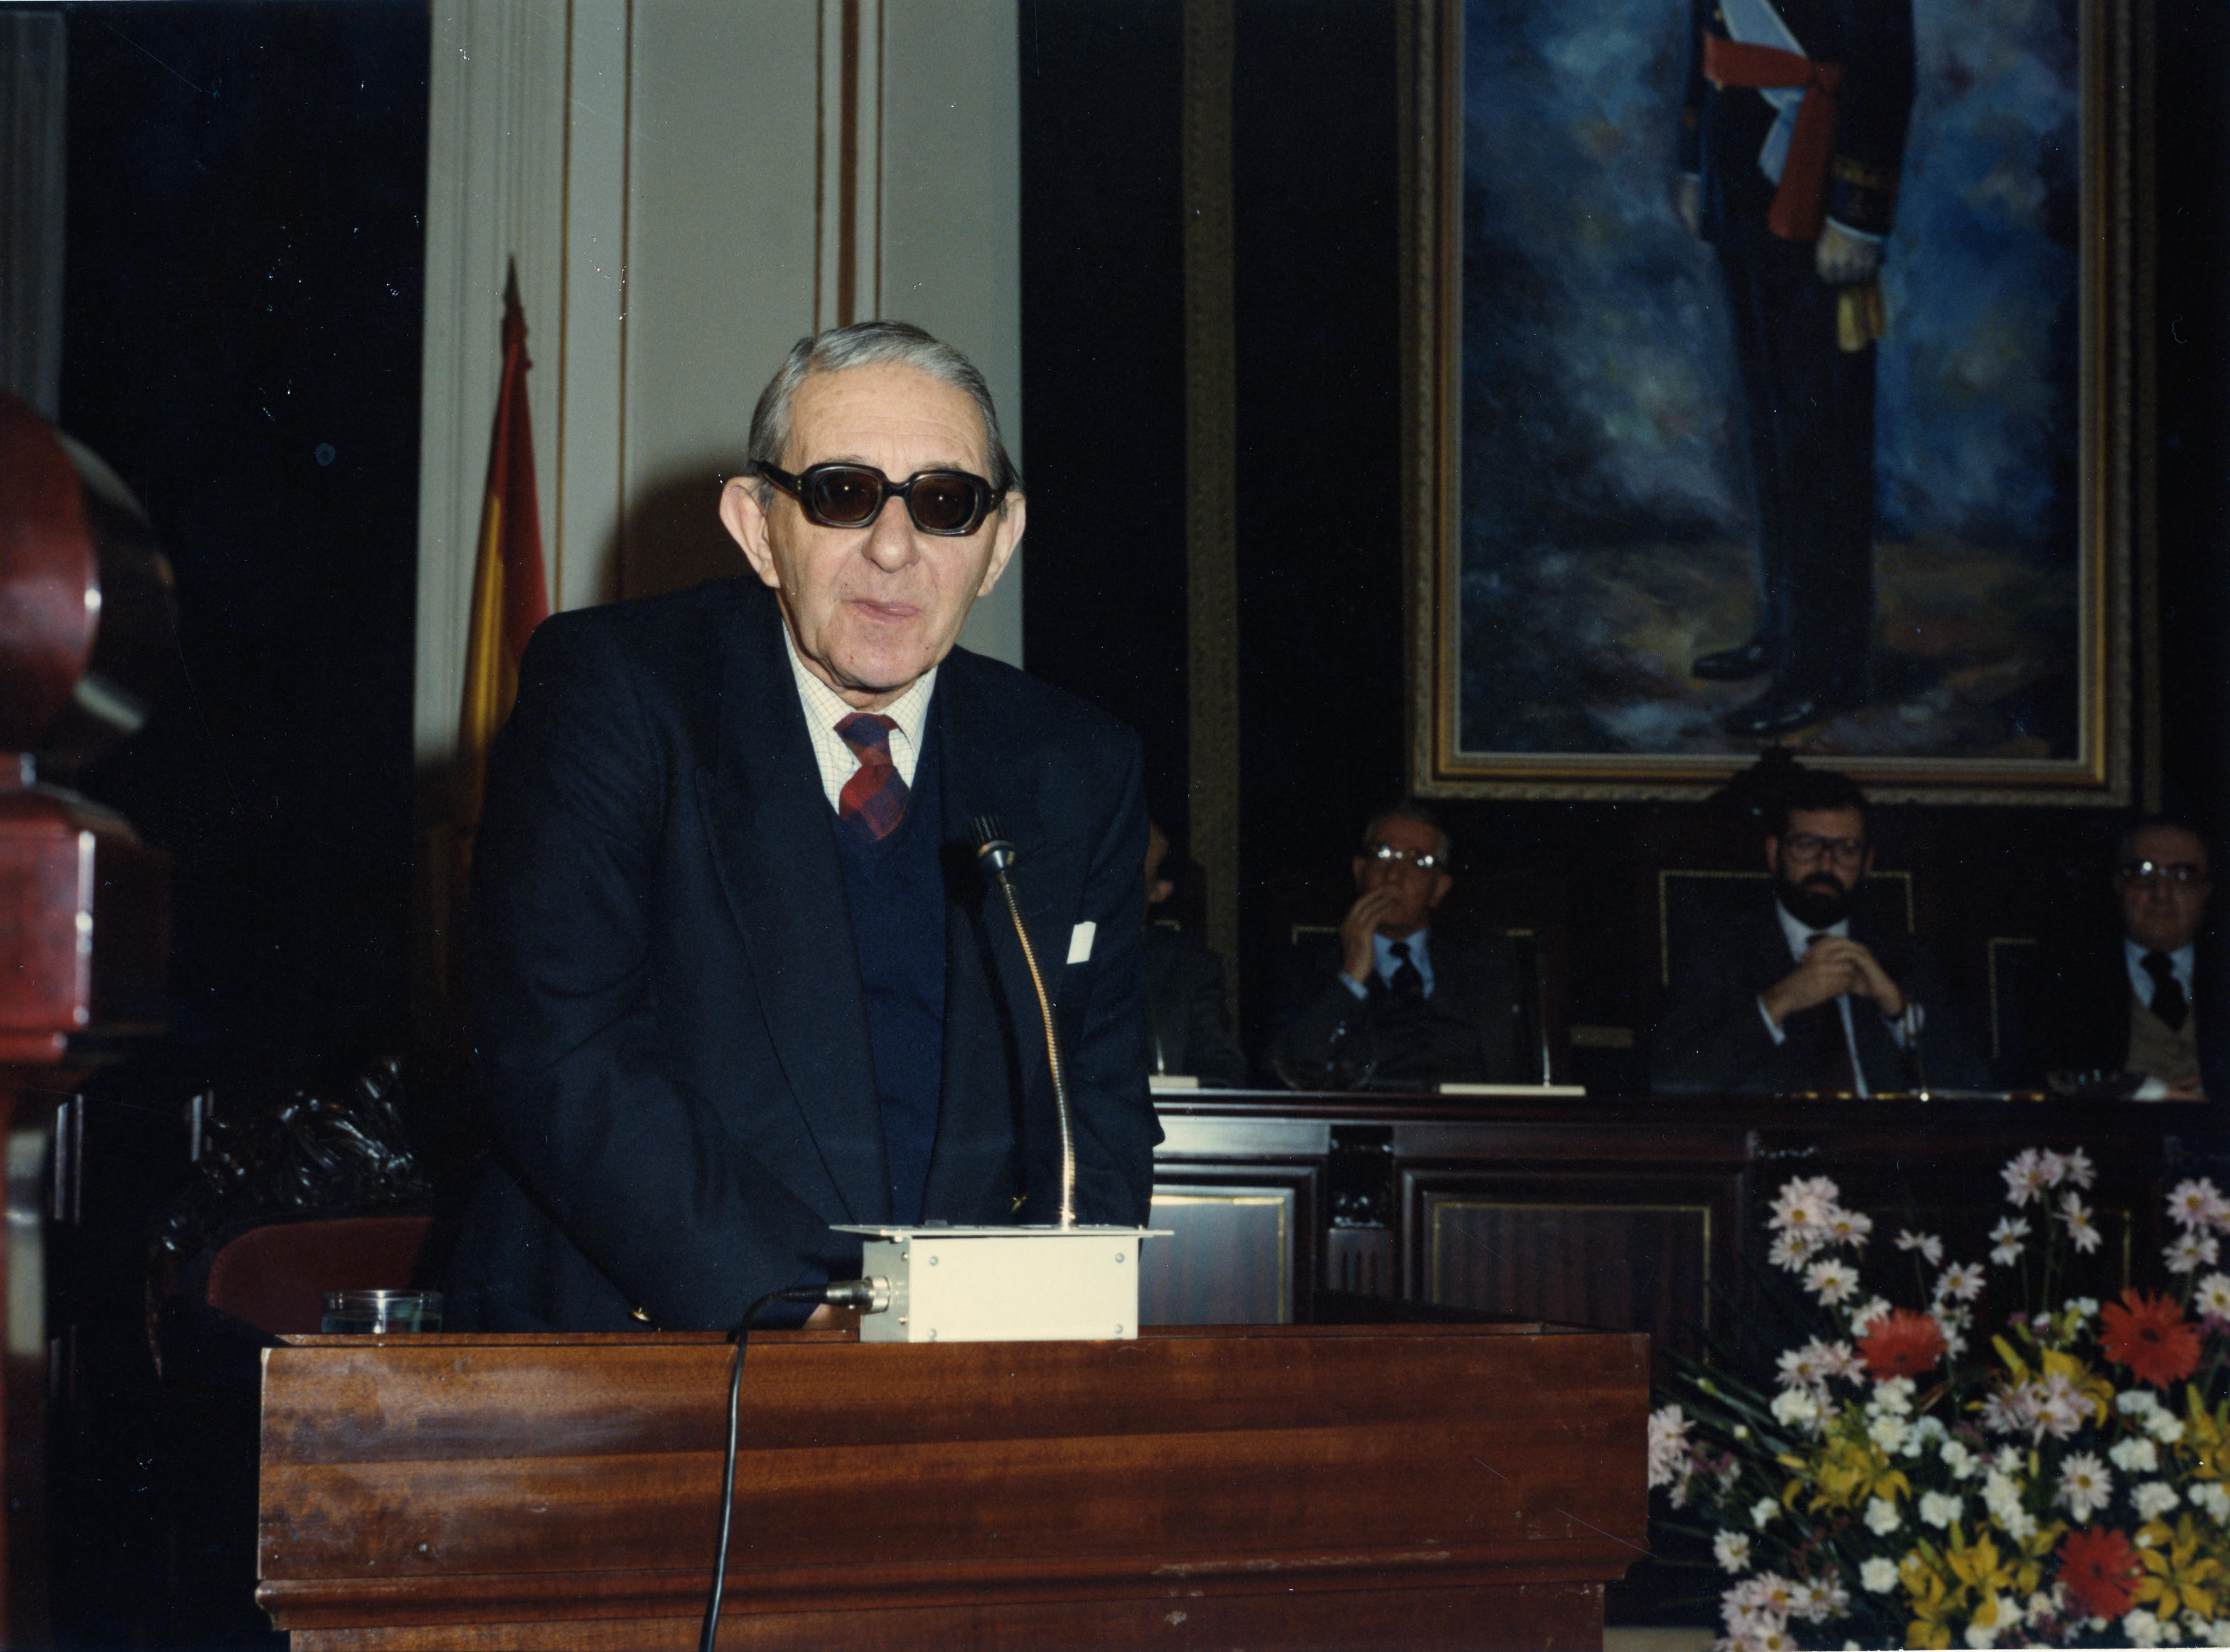 Conferencia de Gonzalo Torrente Ballester no Pazo provincial (1986)